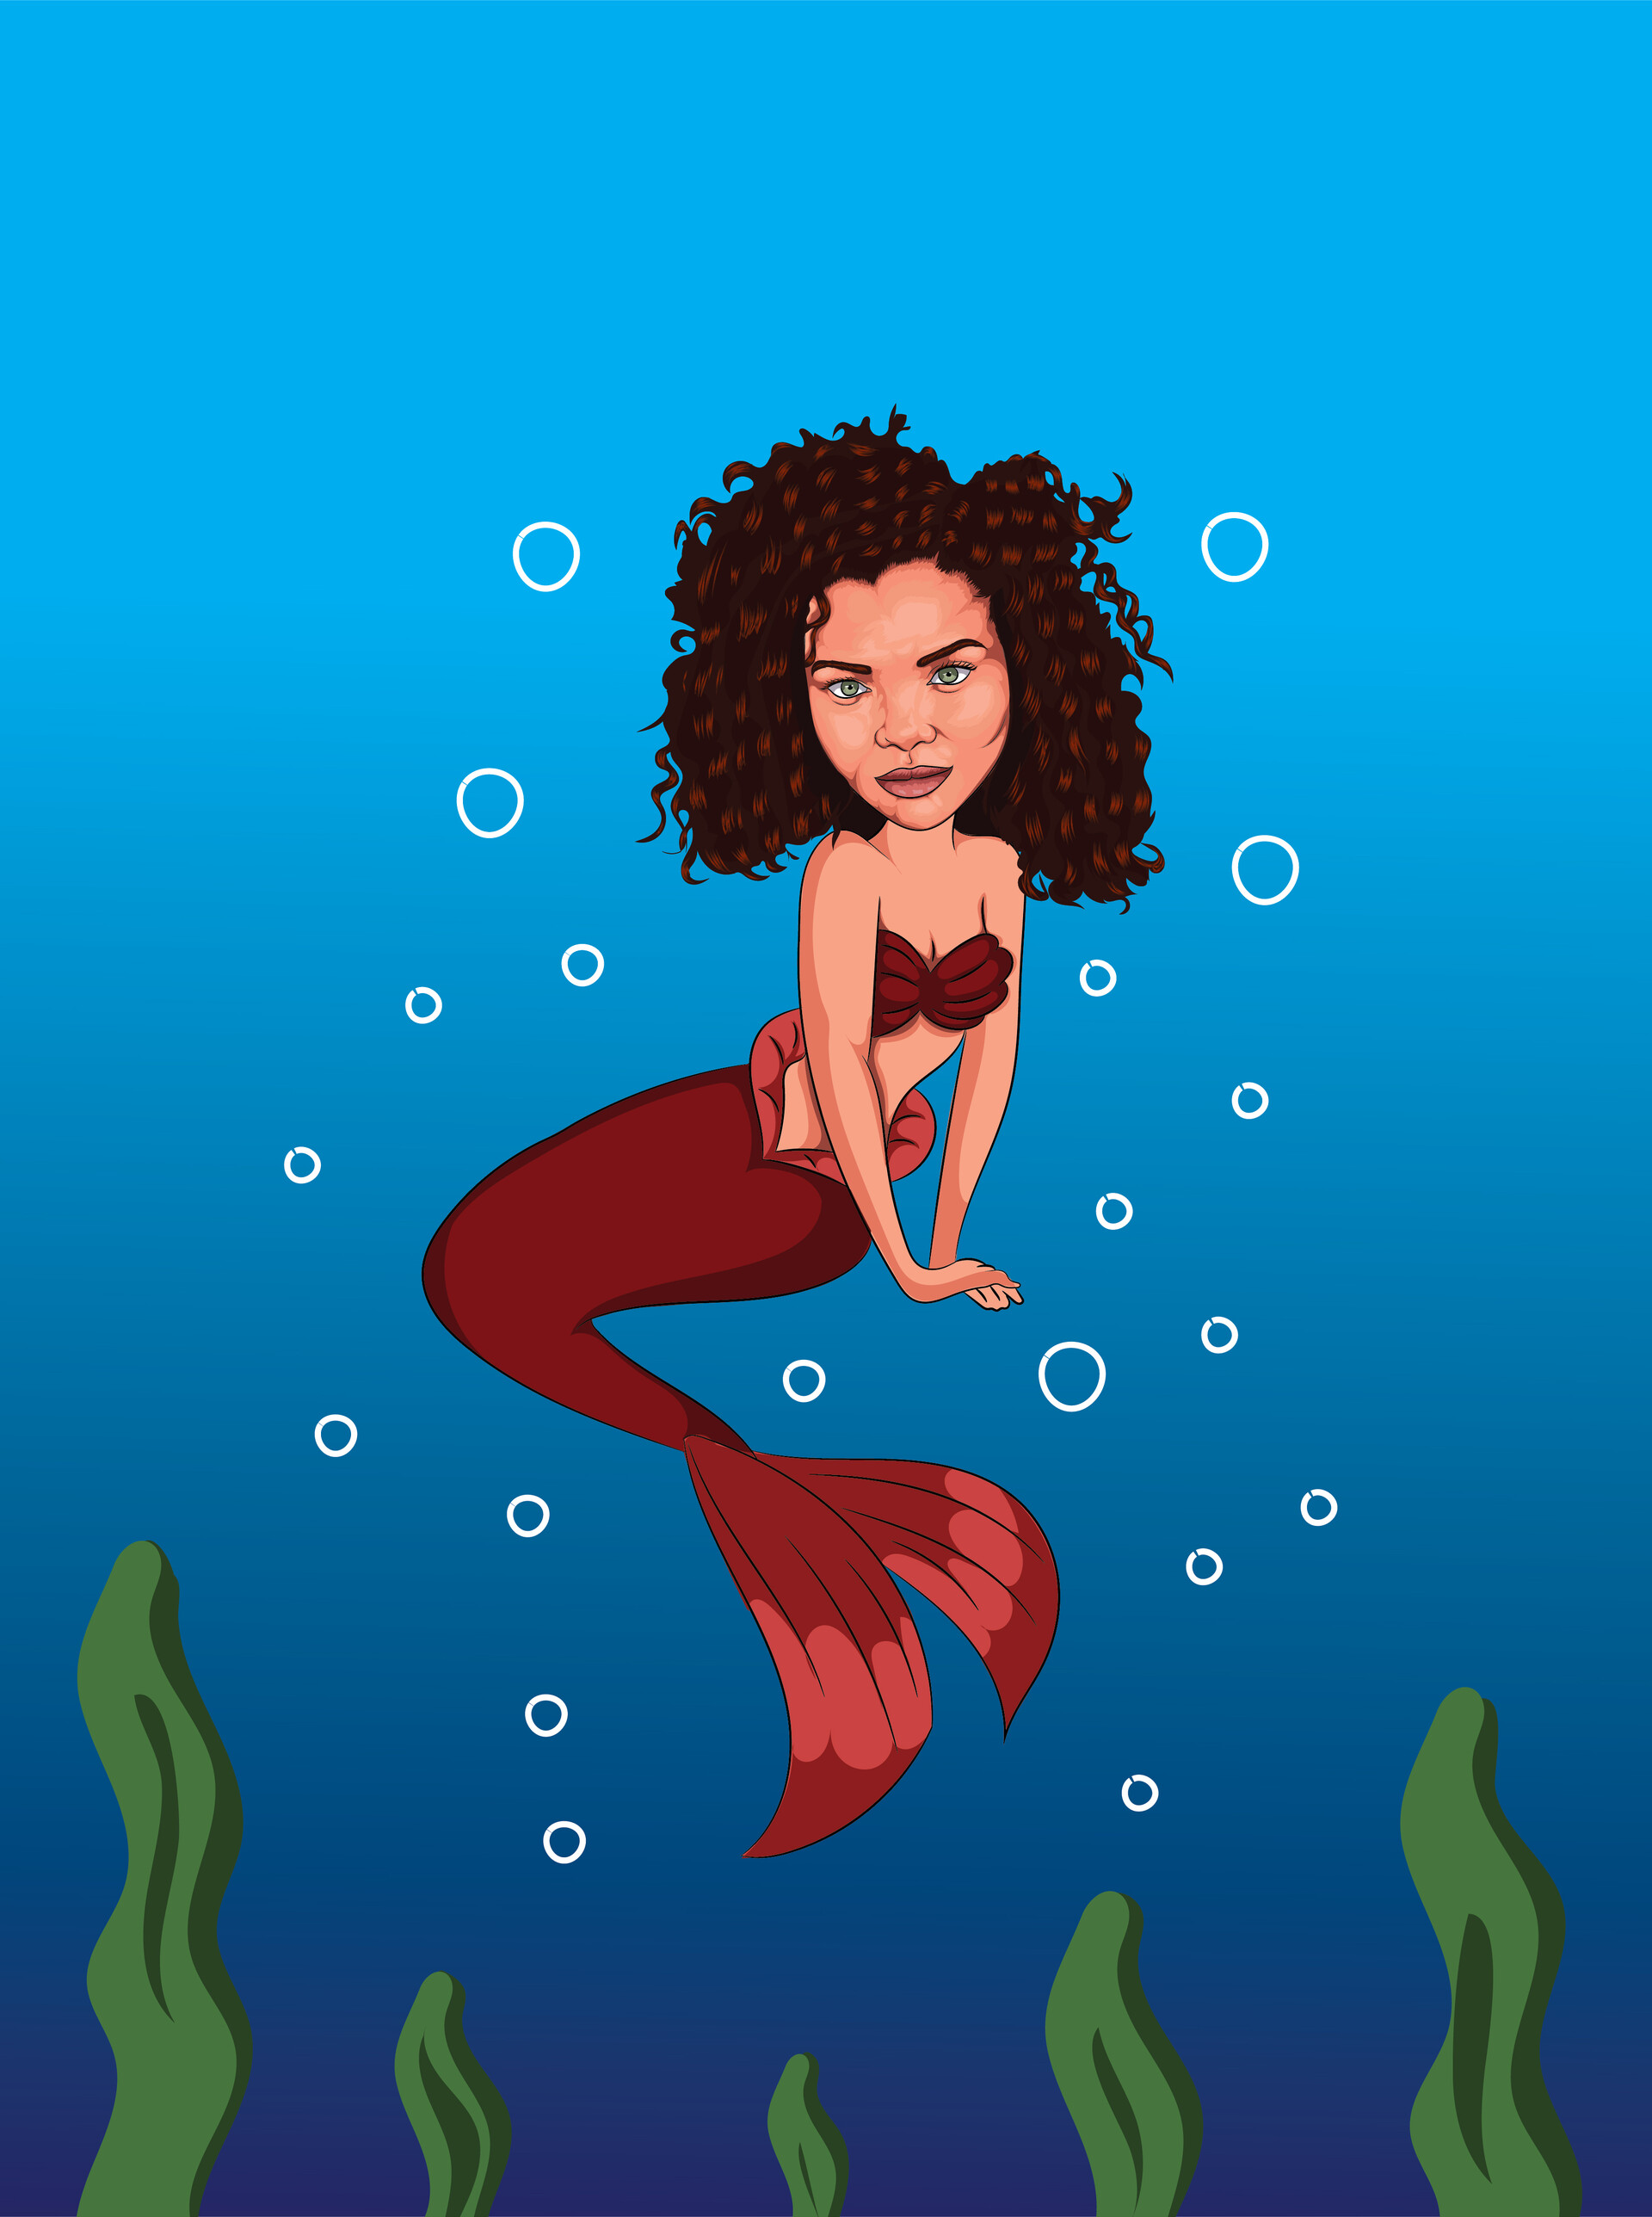 ArtStation - Red dress mermaid cartoon for client